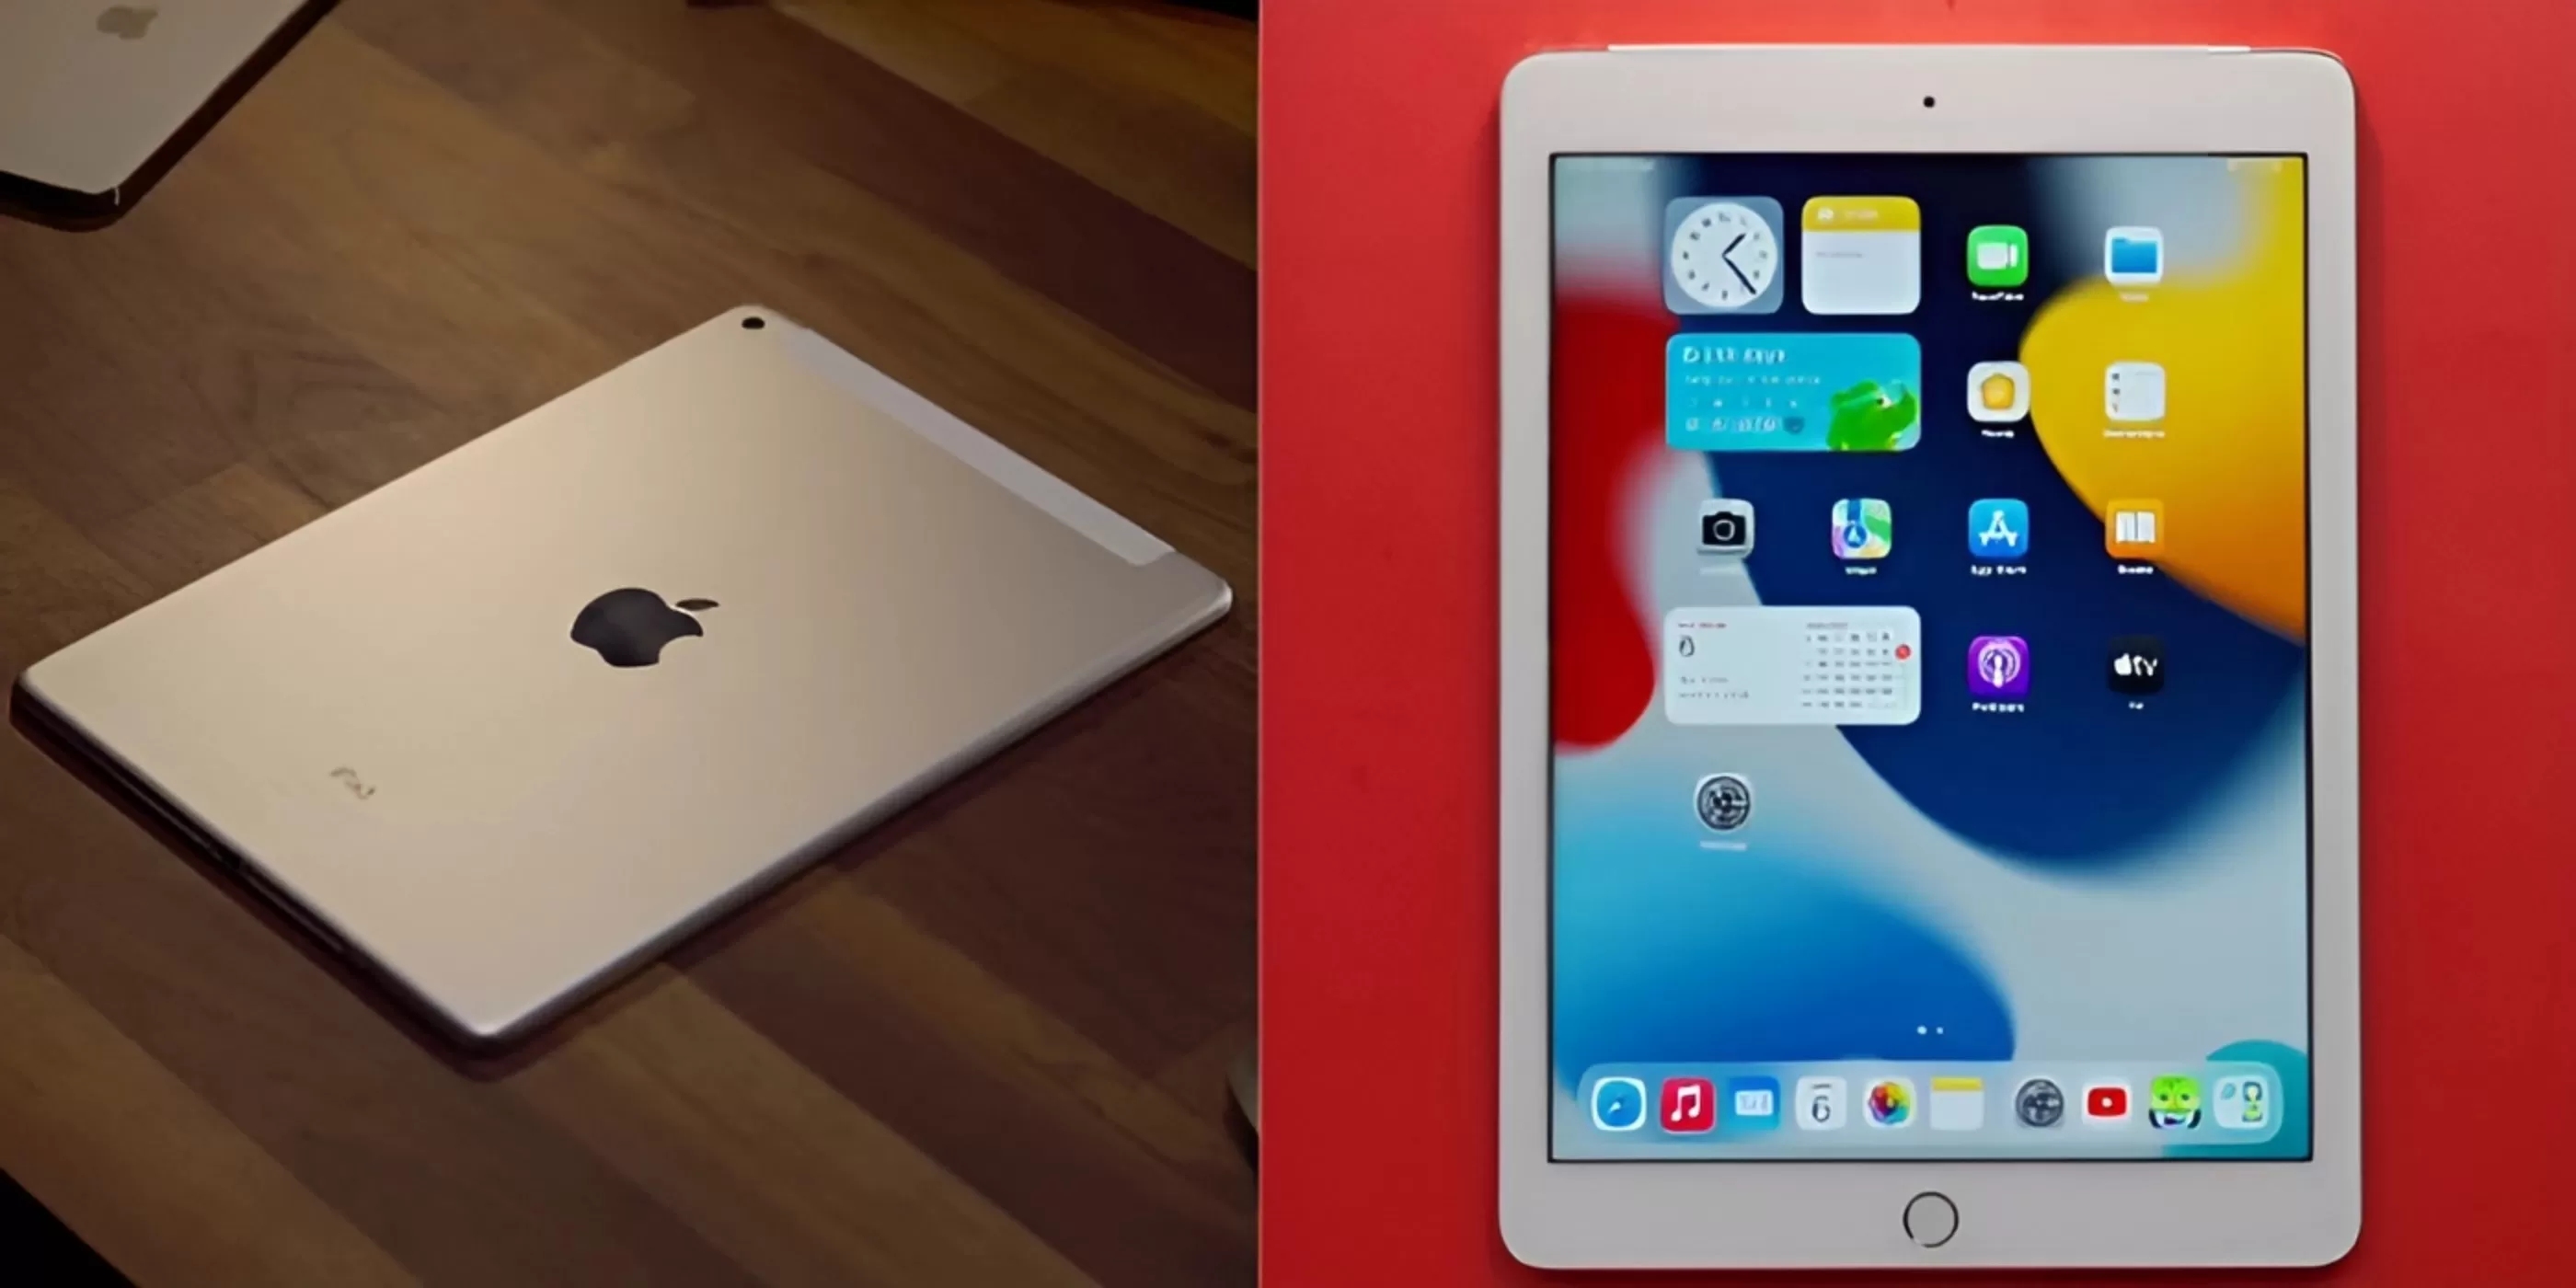 iPad 1 Juta: Terjangkau, Tetapi Seberapa Hebat? - Temukan segala keistimewaan iPad AIR 2 yang dijual dengan harga terjangkau